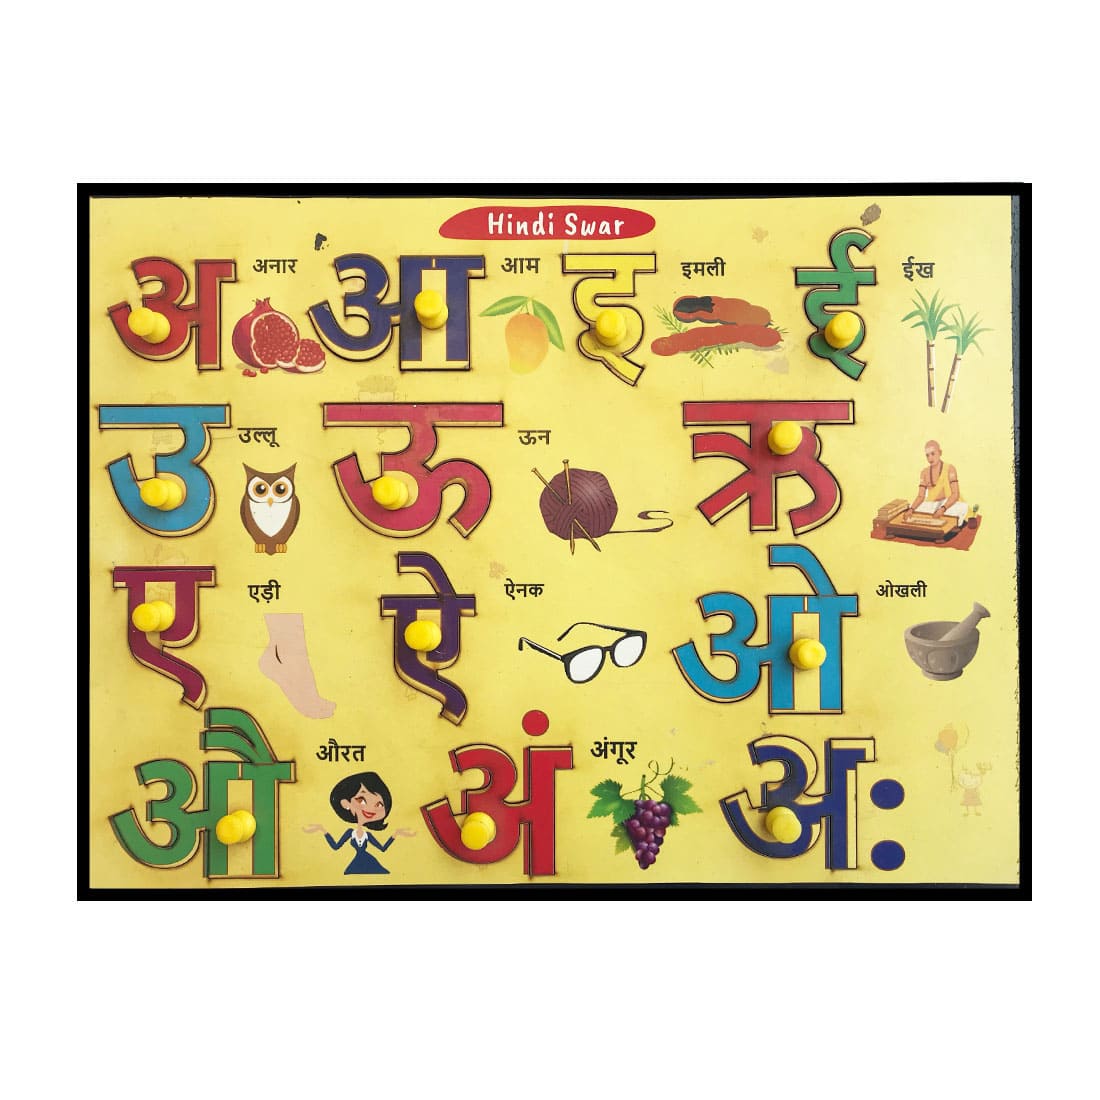 hindi alphabet for kids